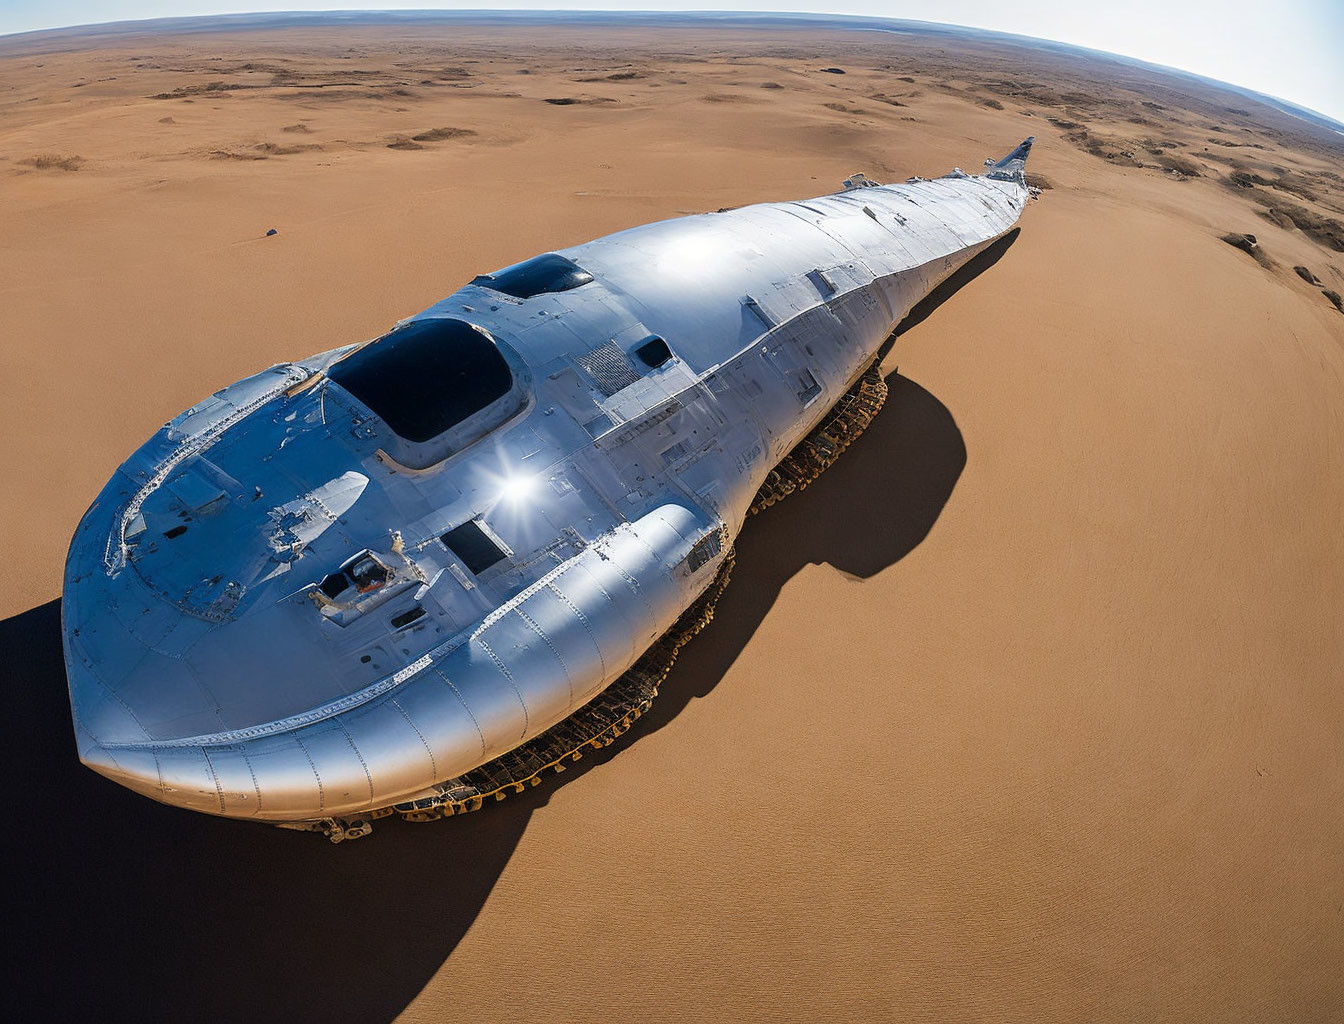 Desert landscape: Abandoned airplane in sand.